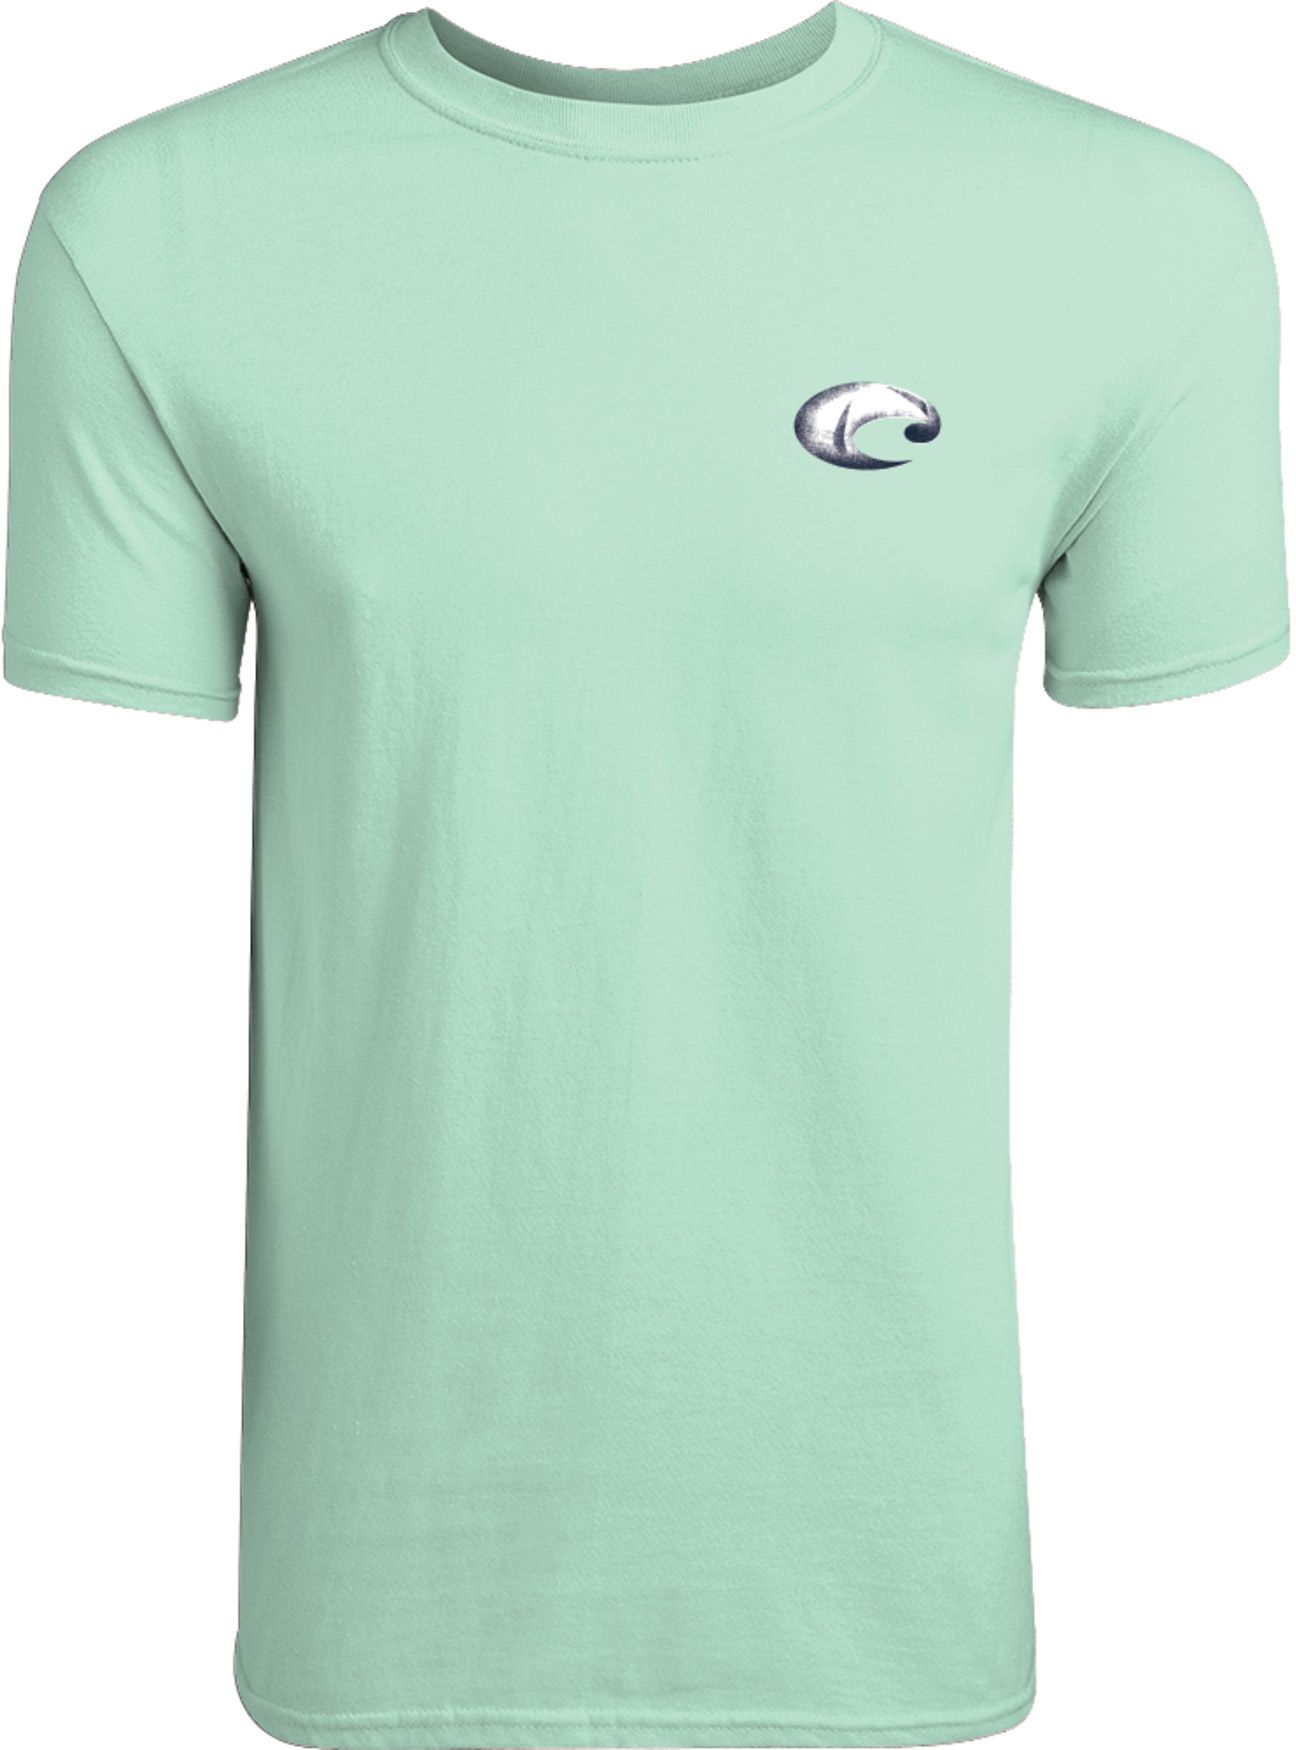 Dick's Sporting Goods Costa Del Mar Men's Surface Shark T-Shirt